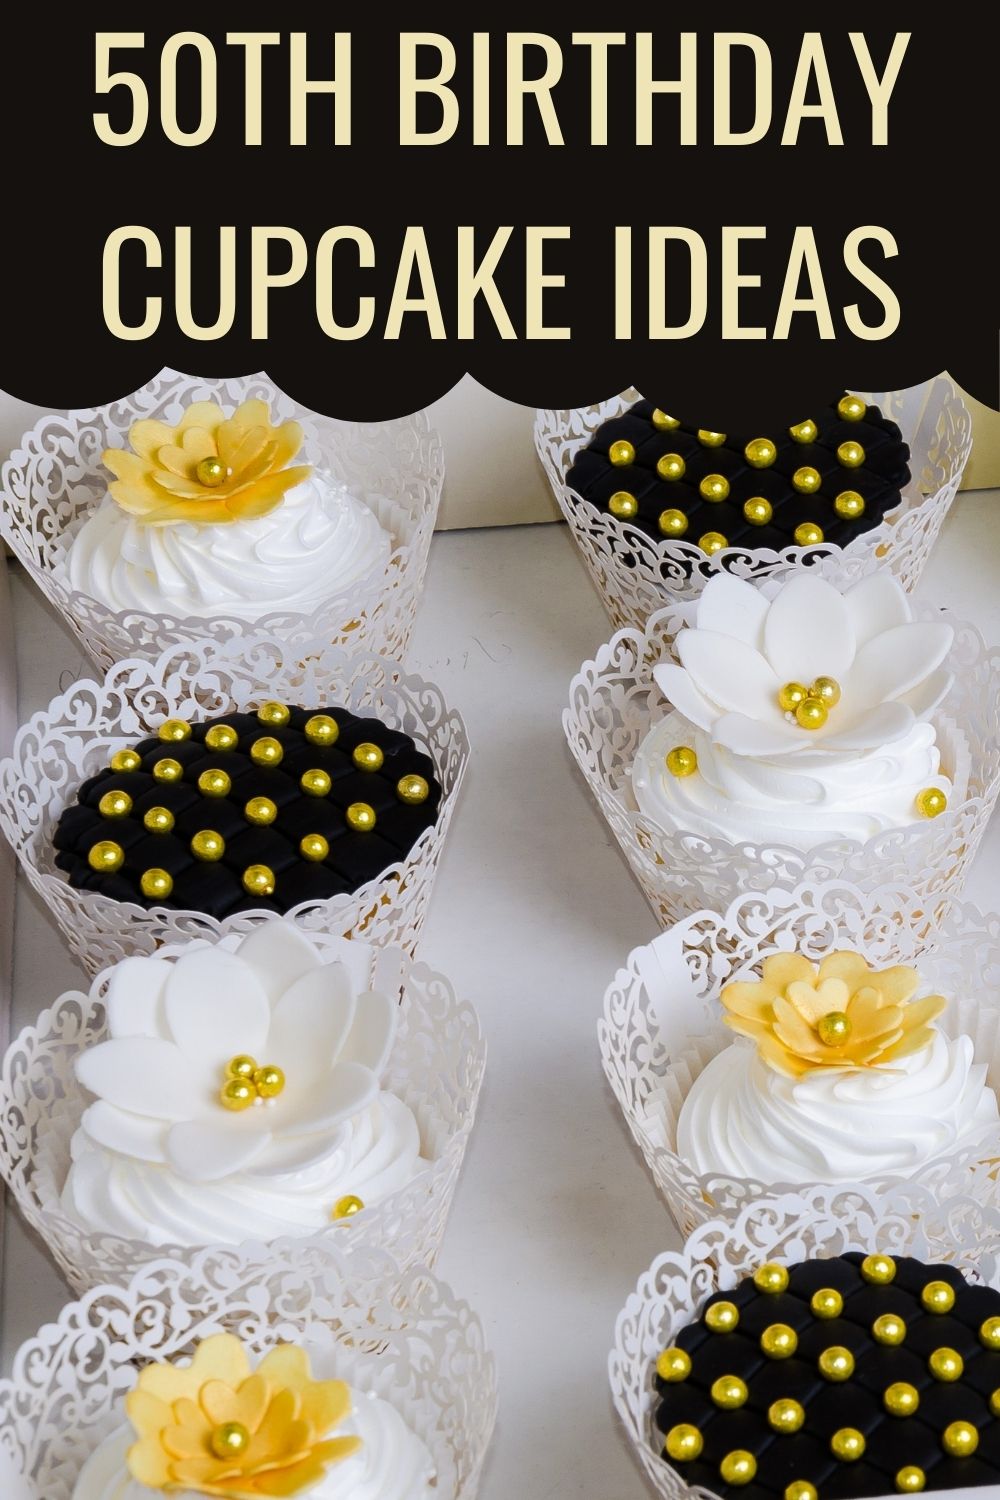 50th birthday cupcake ideas